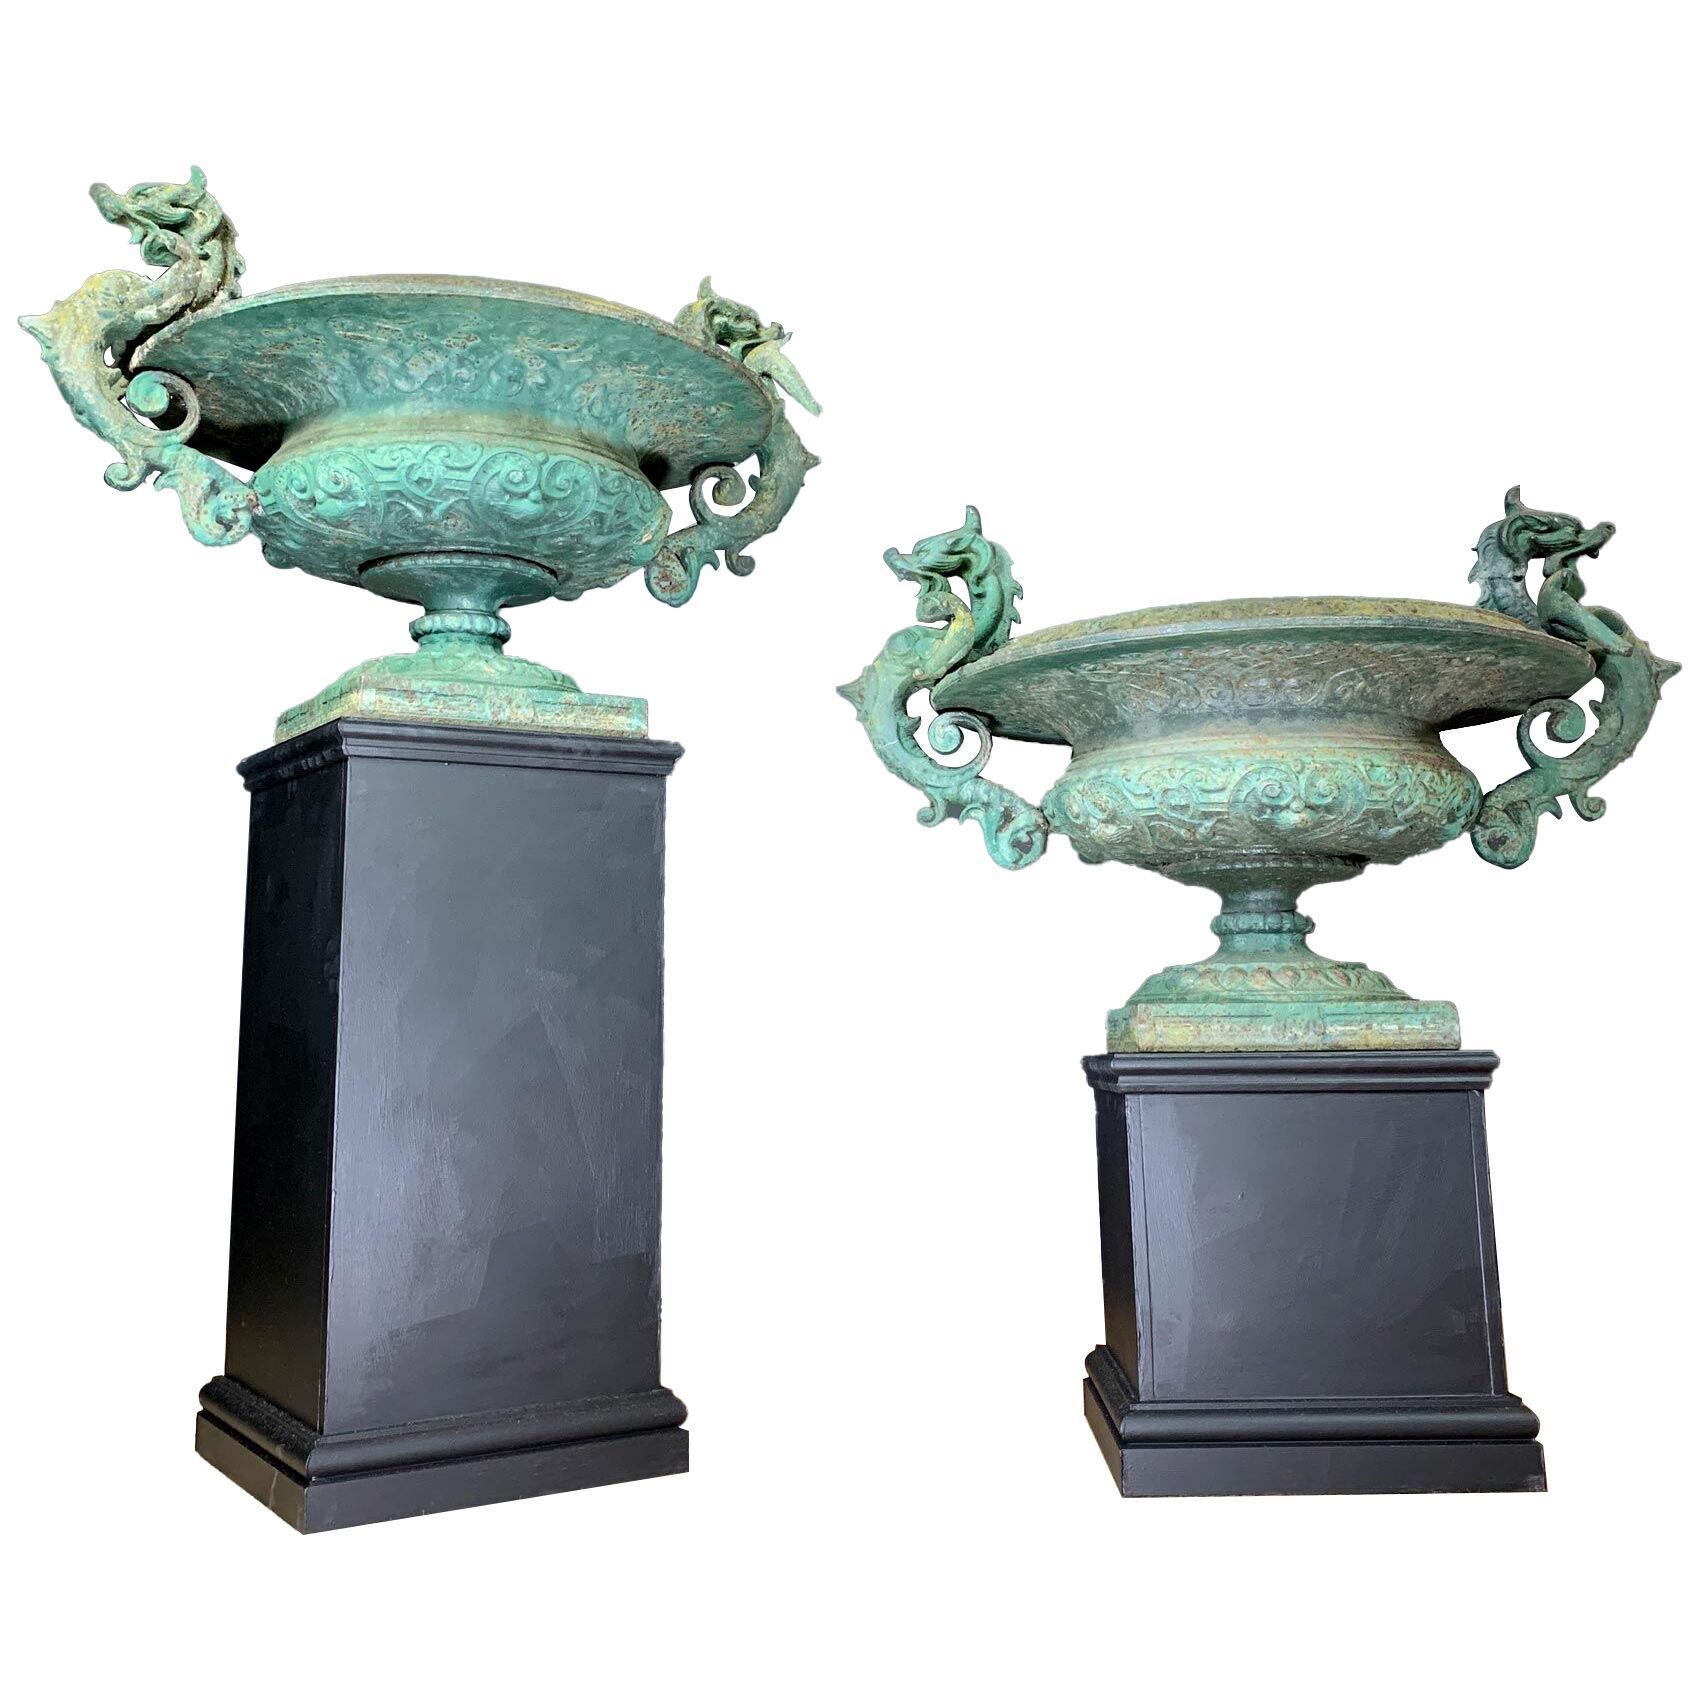 Dragon Handled French cast iron Medici Urns